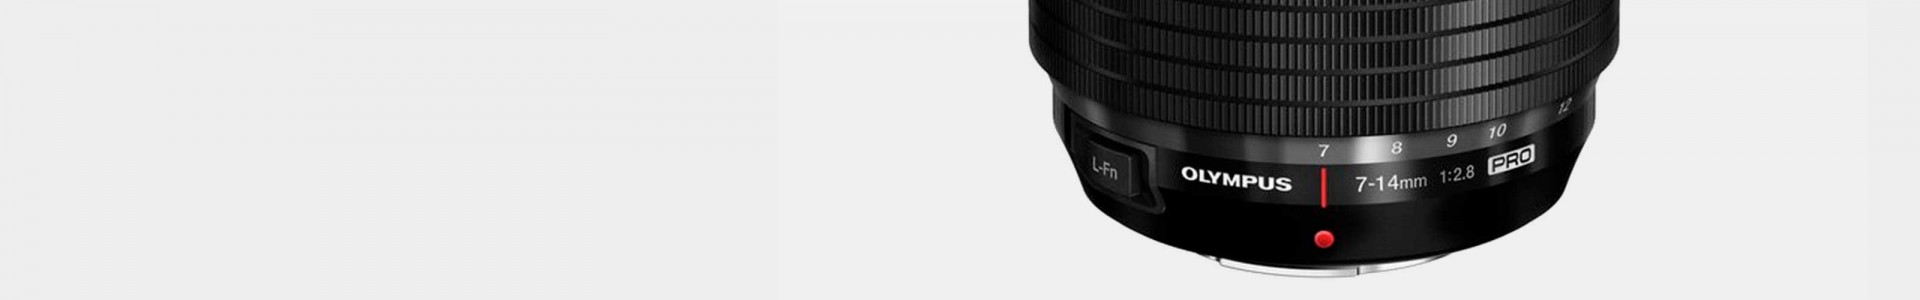 Olympus Lenses at Avacab - Precision at best price online